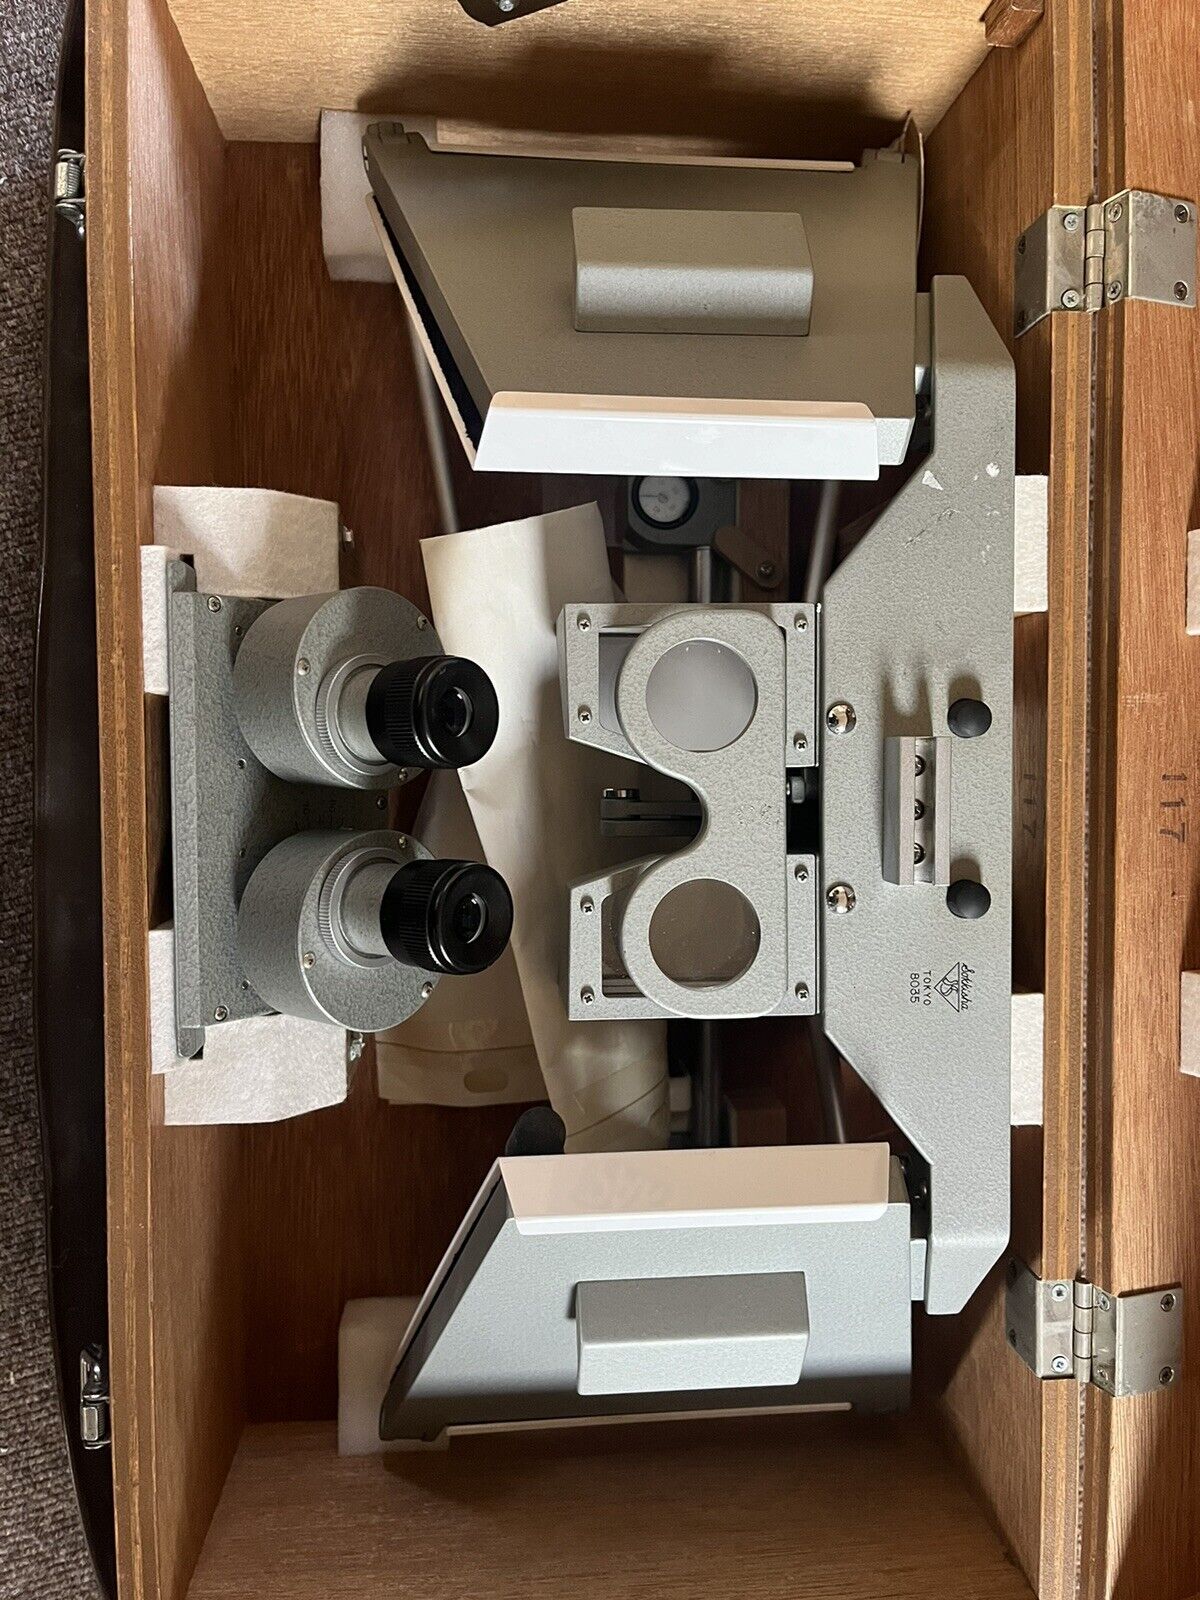 SOKKISHA Limited Tokyo Professional Mirror Mapping Stereoscope Microscope